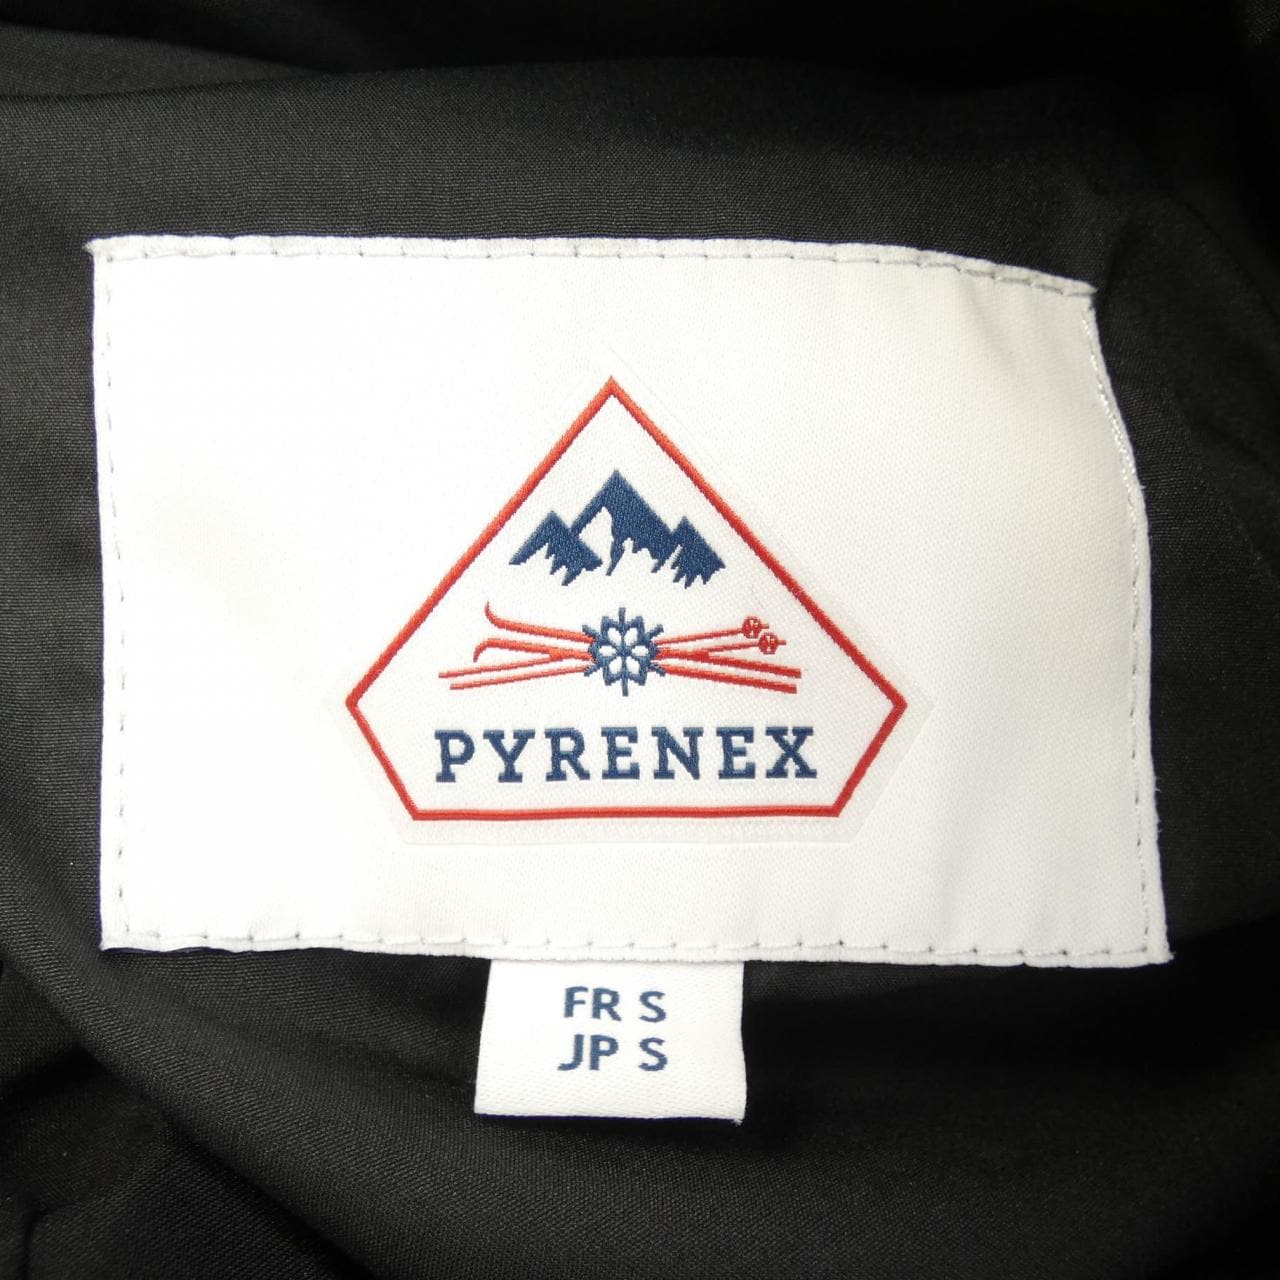 Pirenex PYRENEX down coat